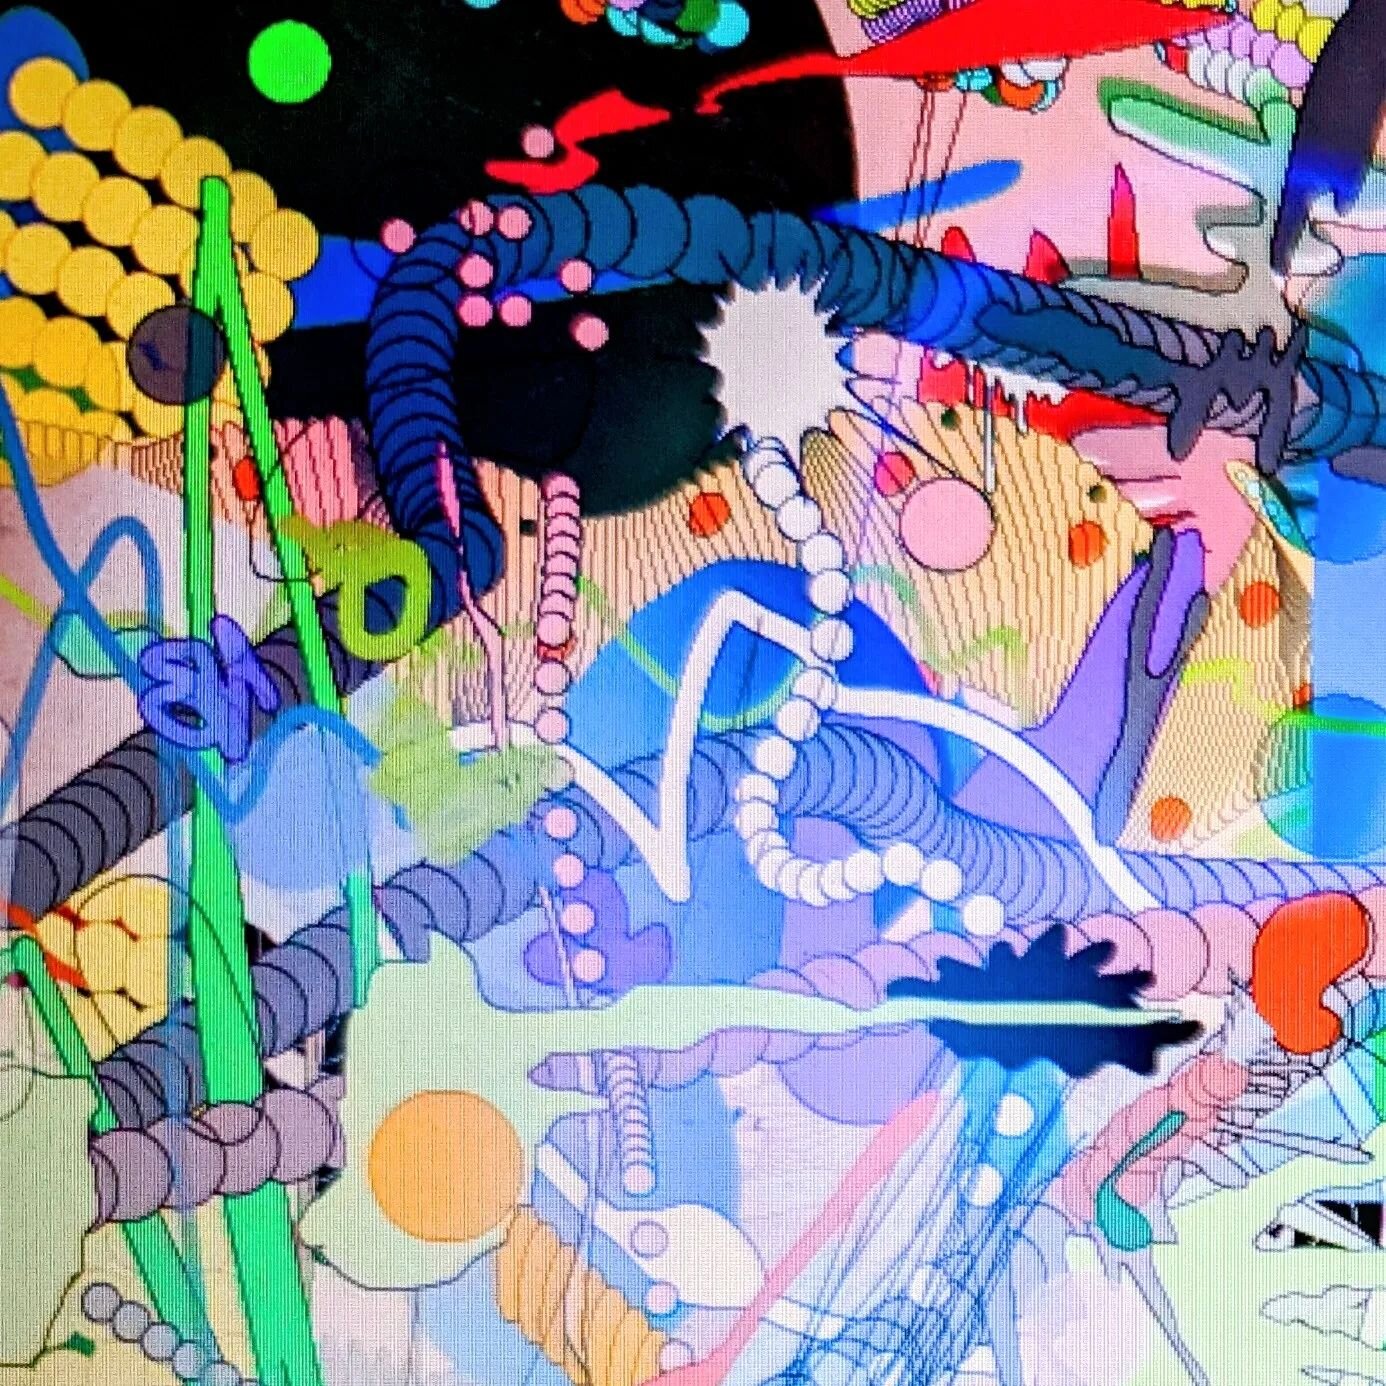 work in progress screenshot pixels
.

.

.

.

.

#digitalart #newcontemporary #mixedartist #digitalillustration #drawing #psychedelicart&nbsp; #multiracialartist #psychedelic #cyberpunk #seattleartist #abstractart #superflat #abstractartist #kunst #